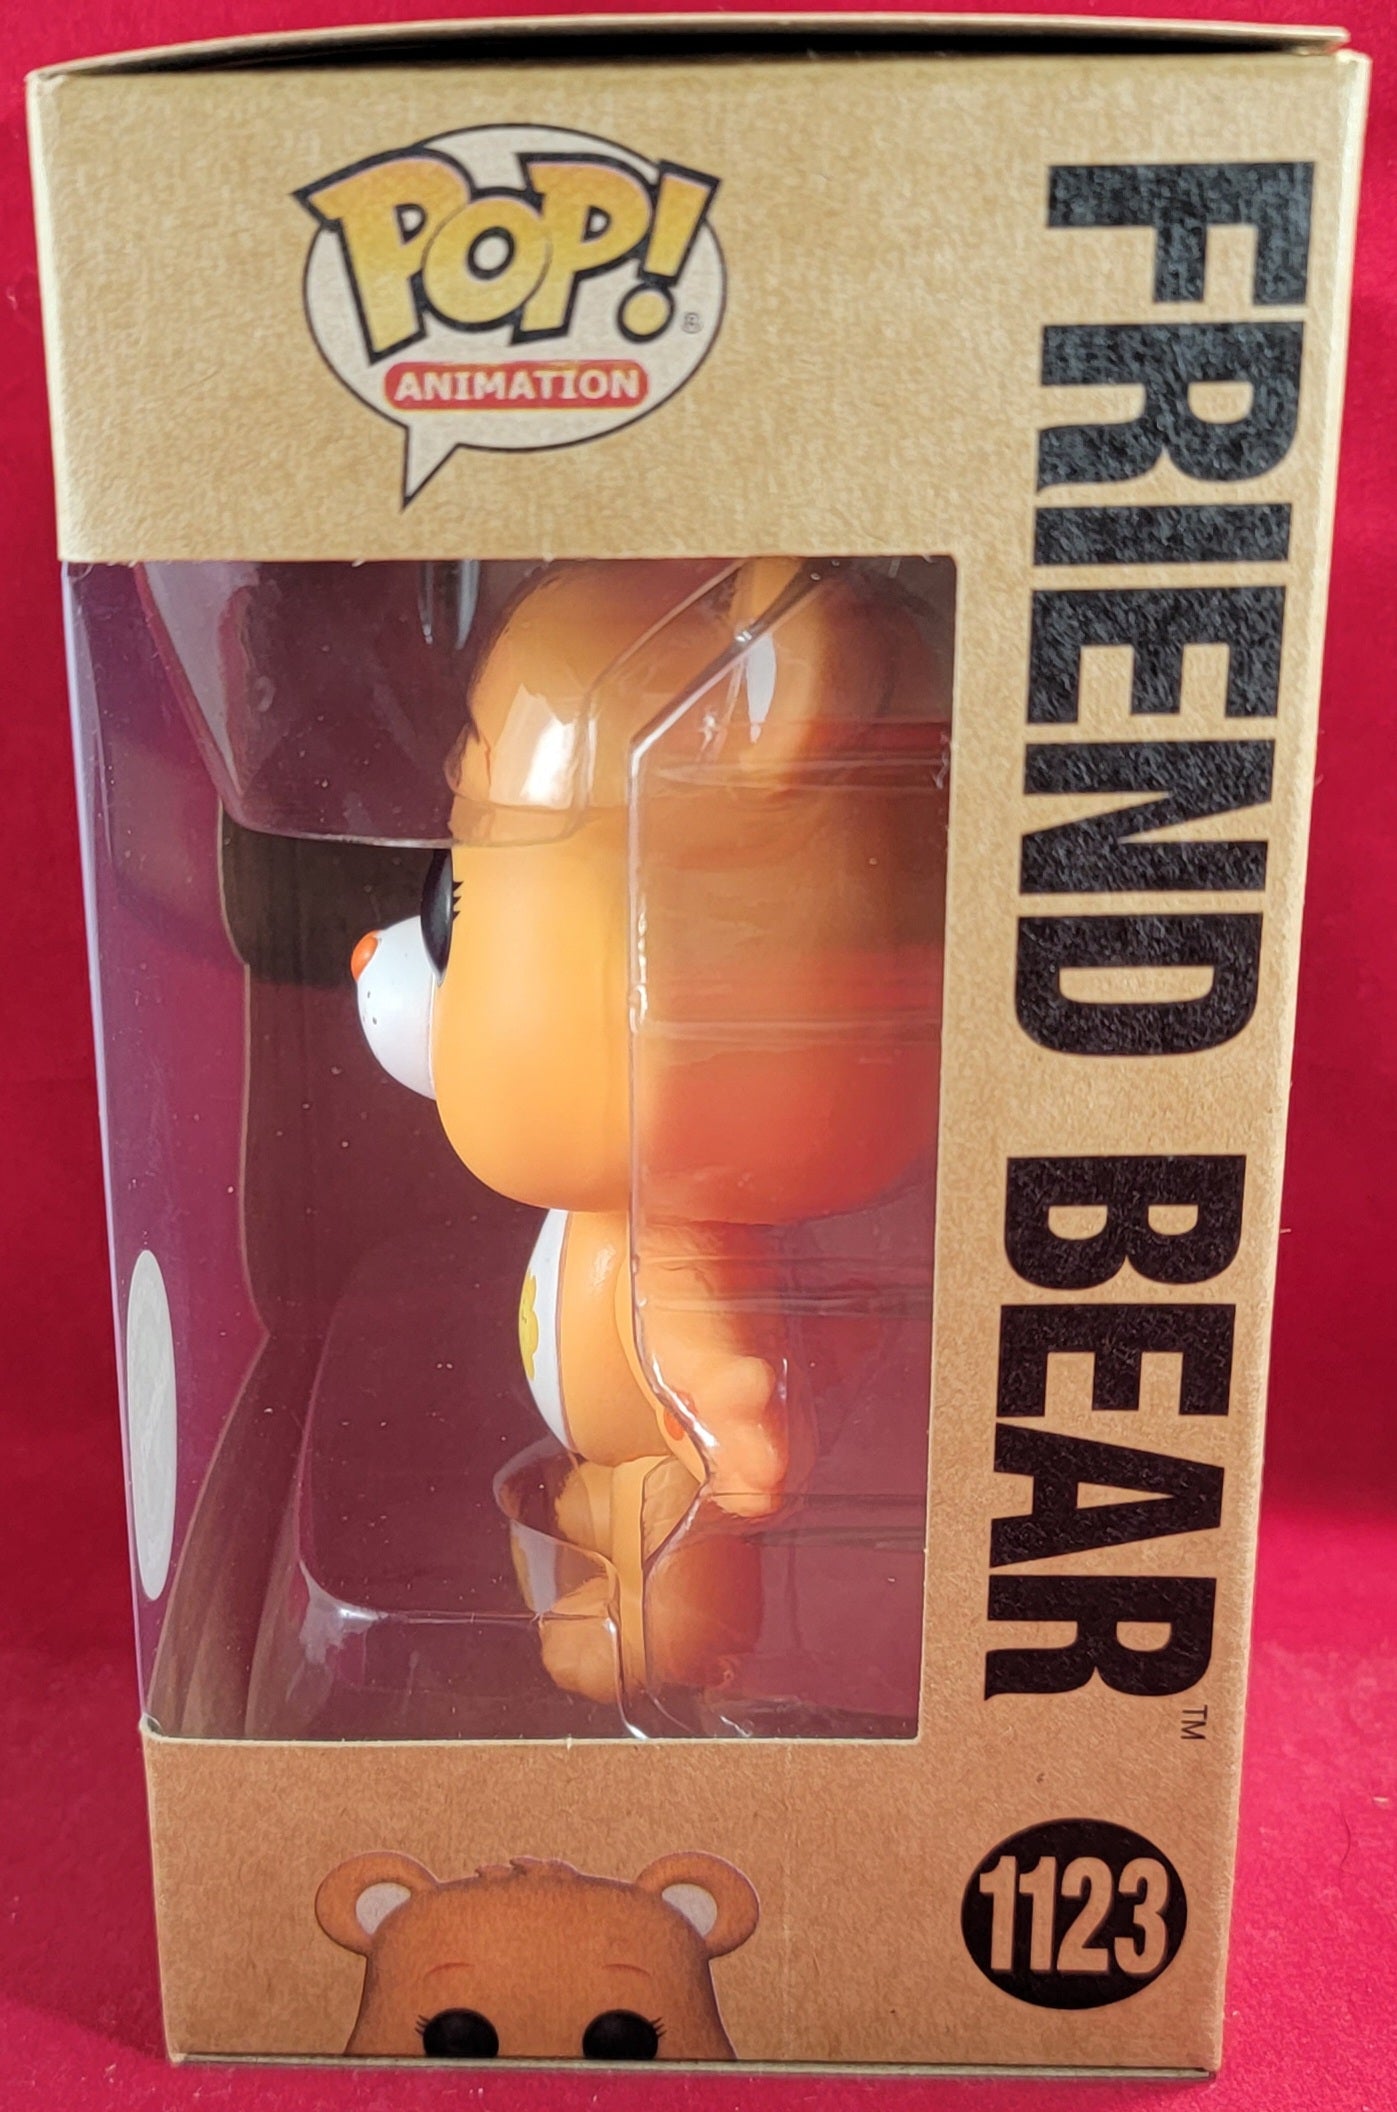 Care Bears - Friend Bear - figurine POP 1123 POP! Animation